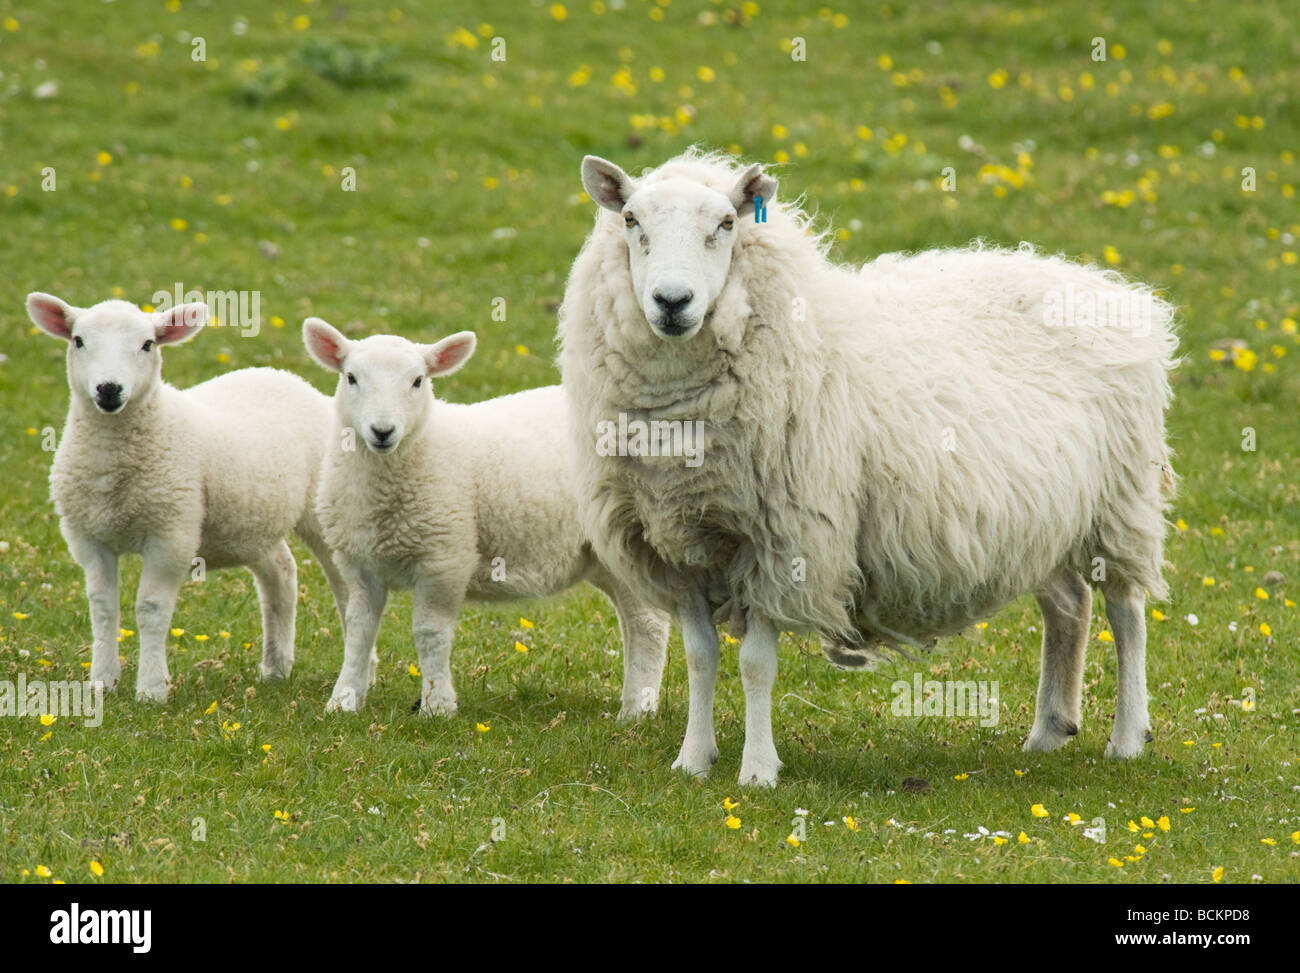 Oveja oveja con corderos, Junio Monach islas Hébridas, Escocia Foto de stock